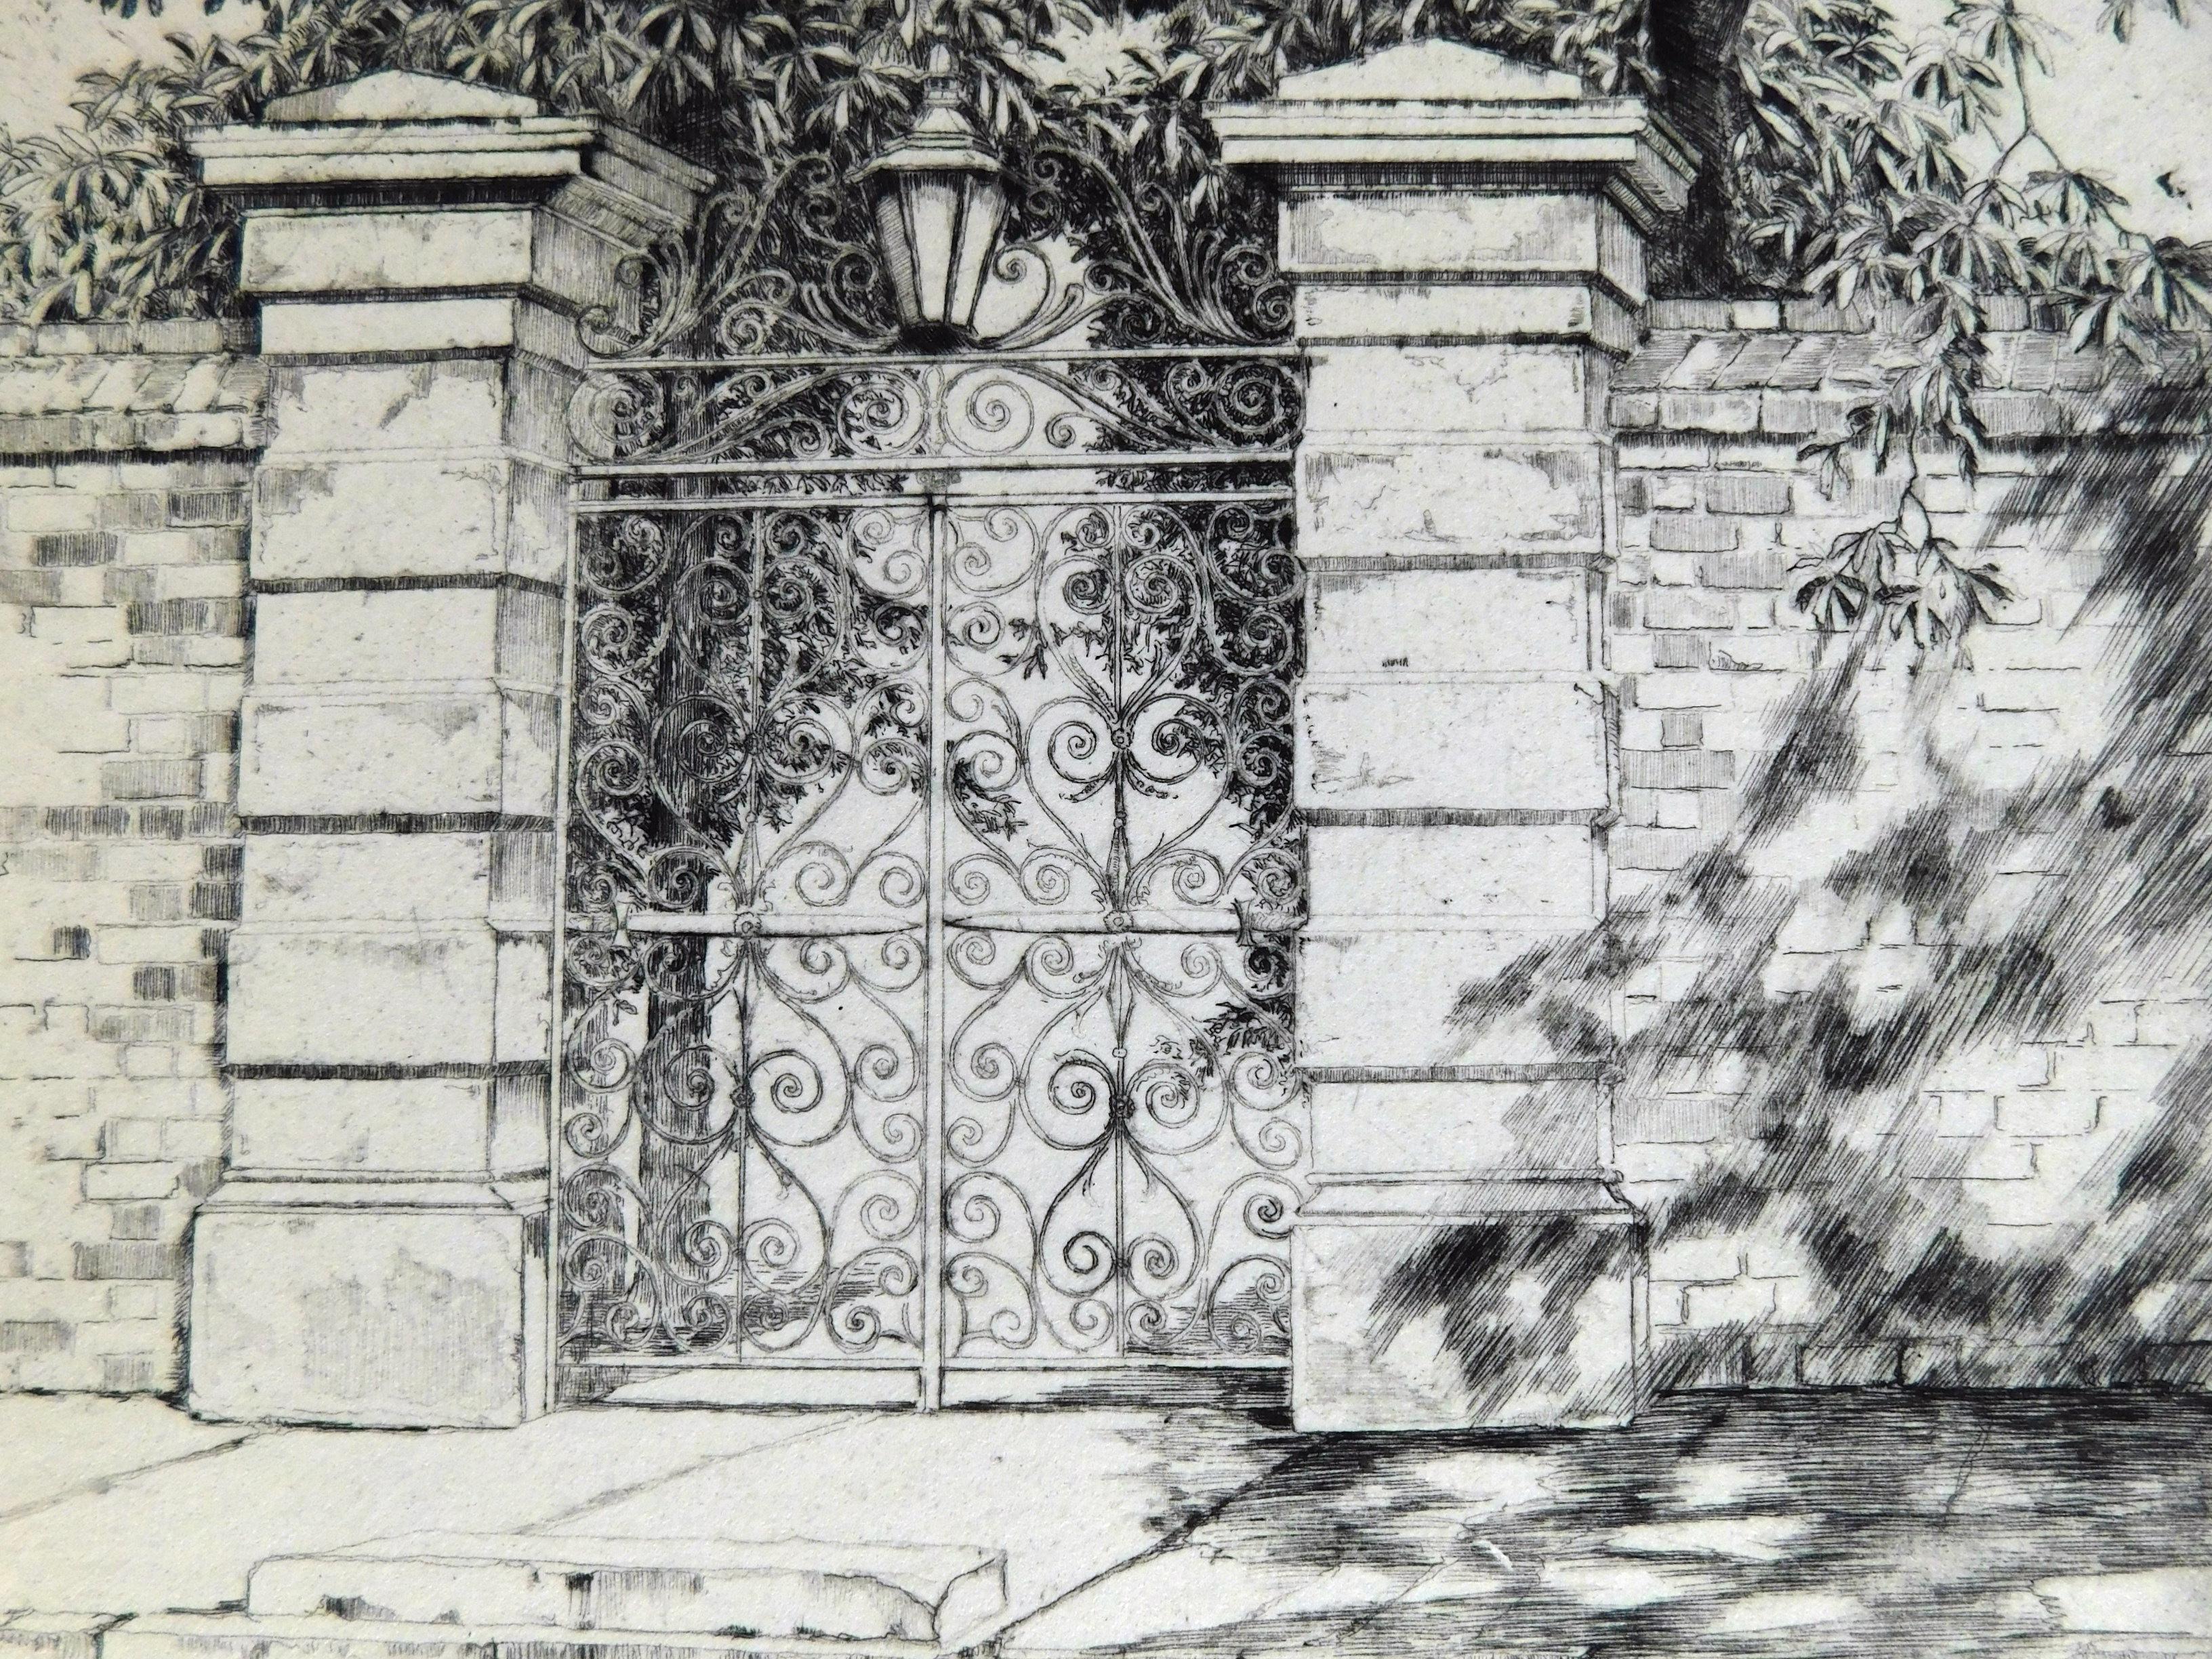 20th Century Alfred Hutty Original Etching, circa 1935, “The Sword Gate” 